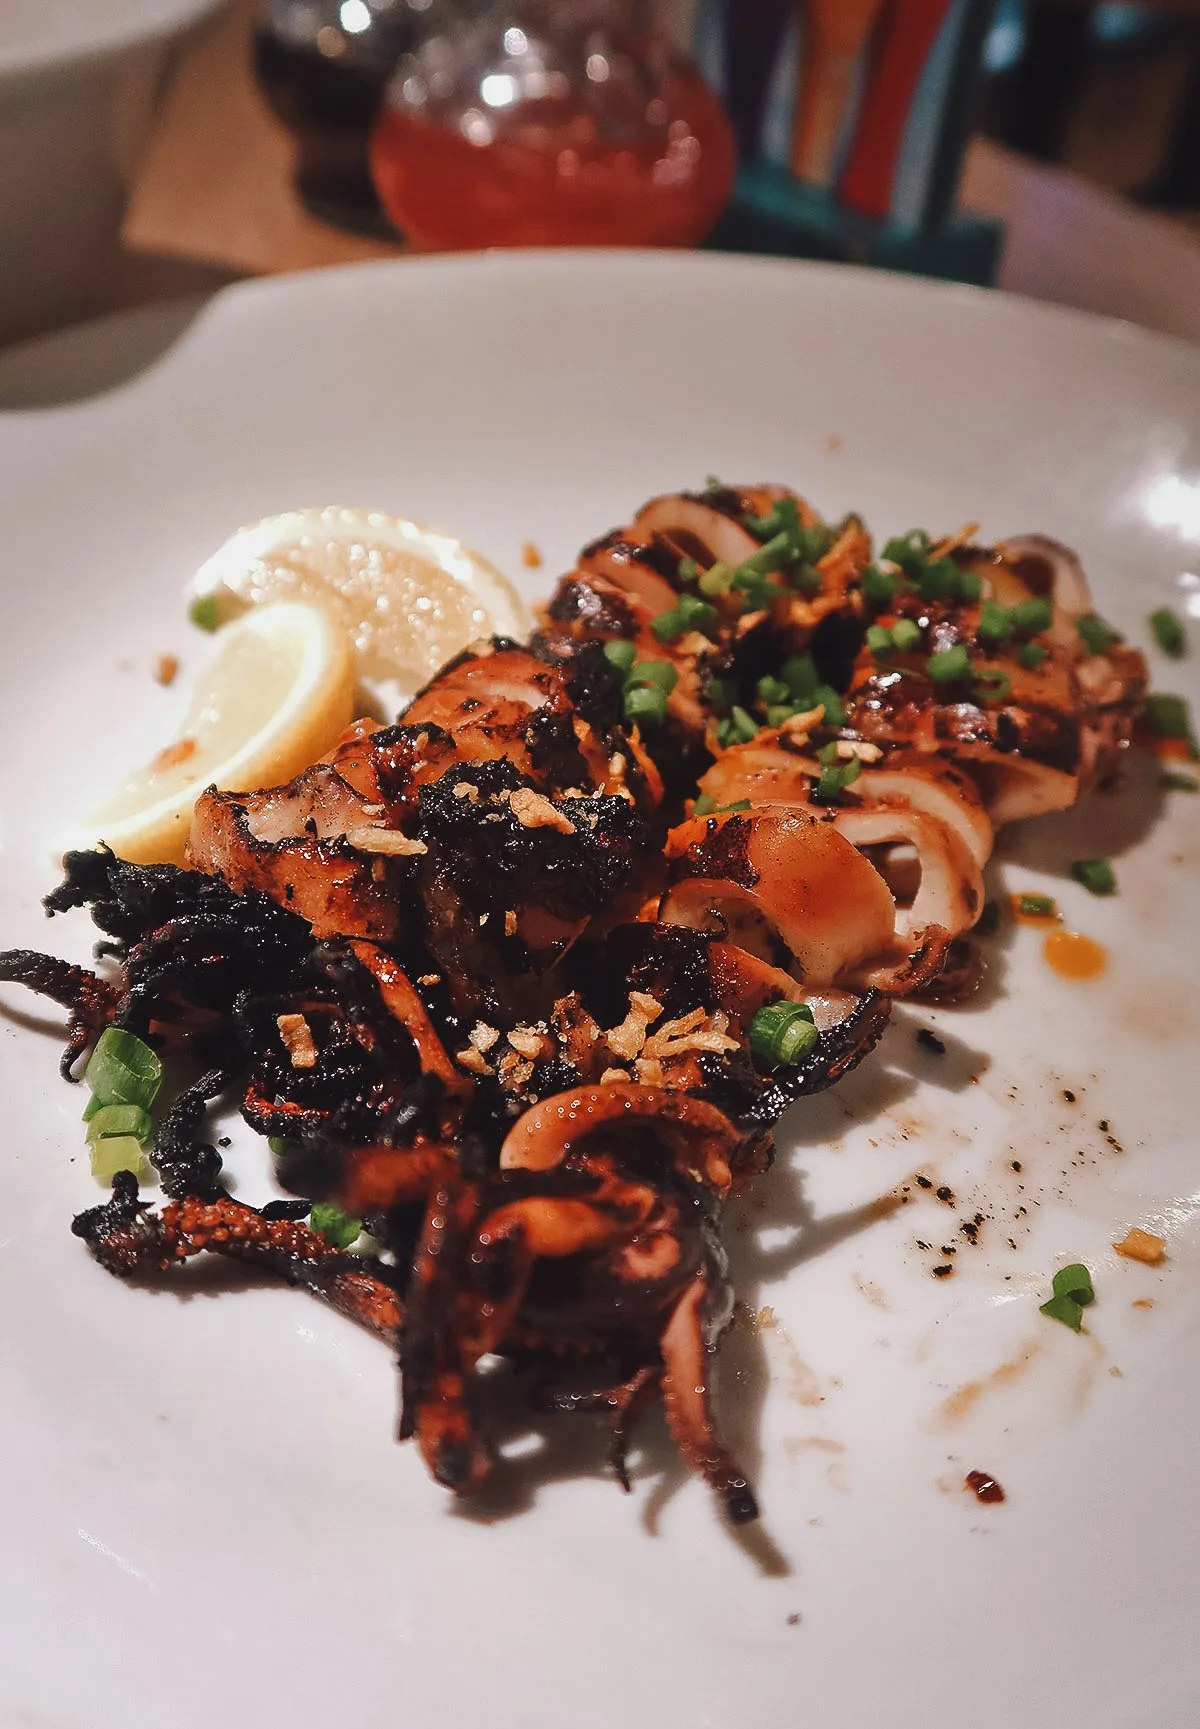 Grilled squid dish at a restaurant in Metro Manila